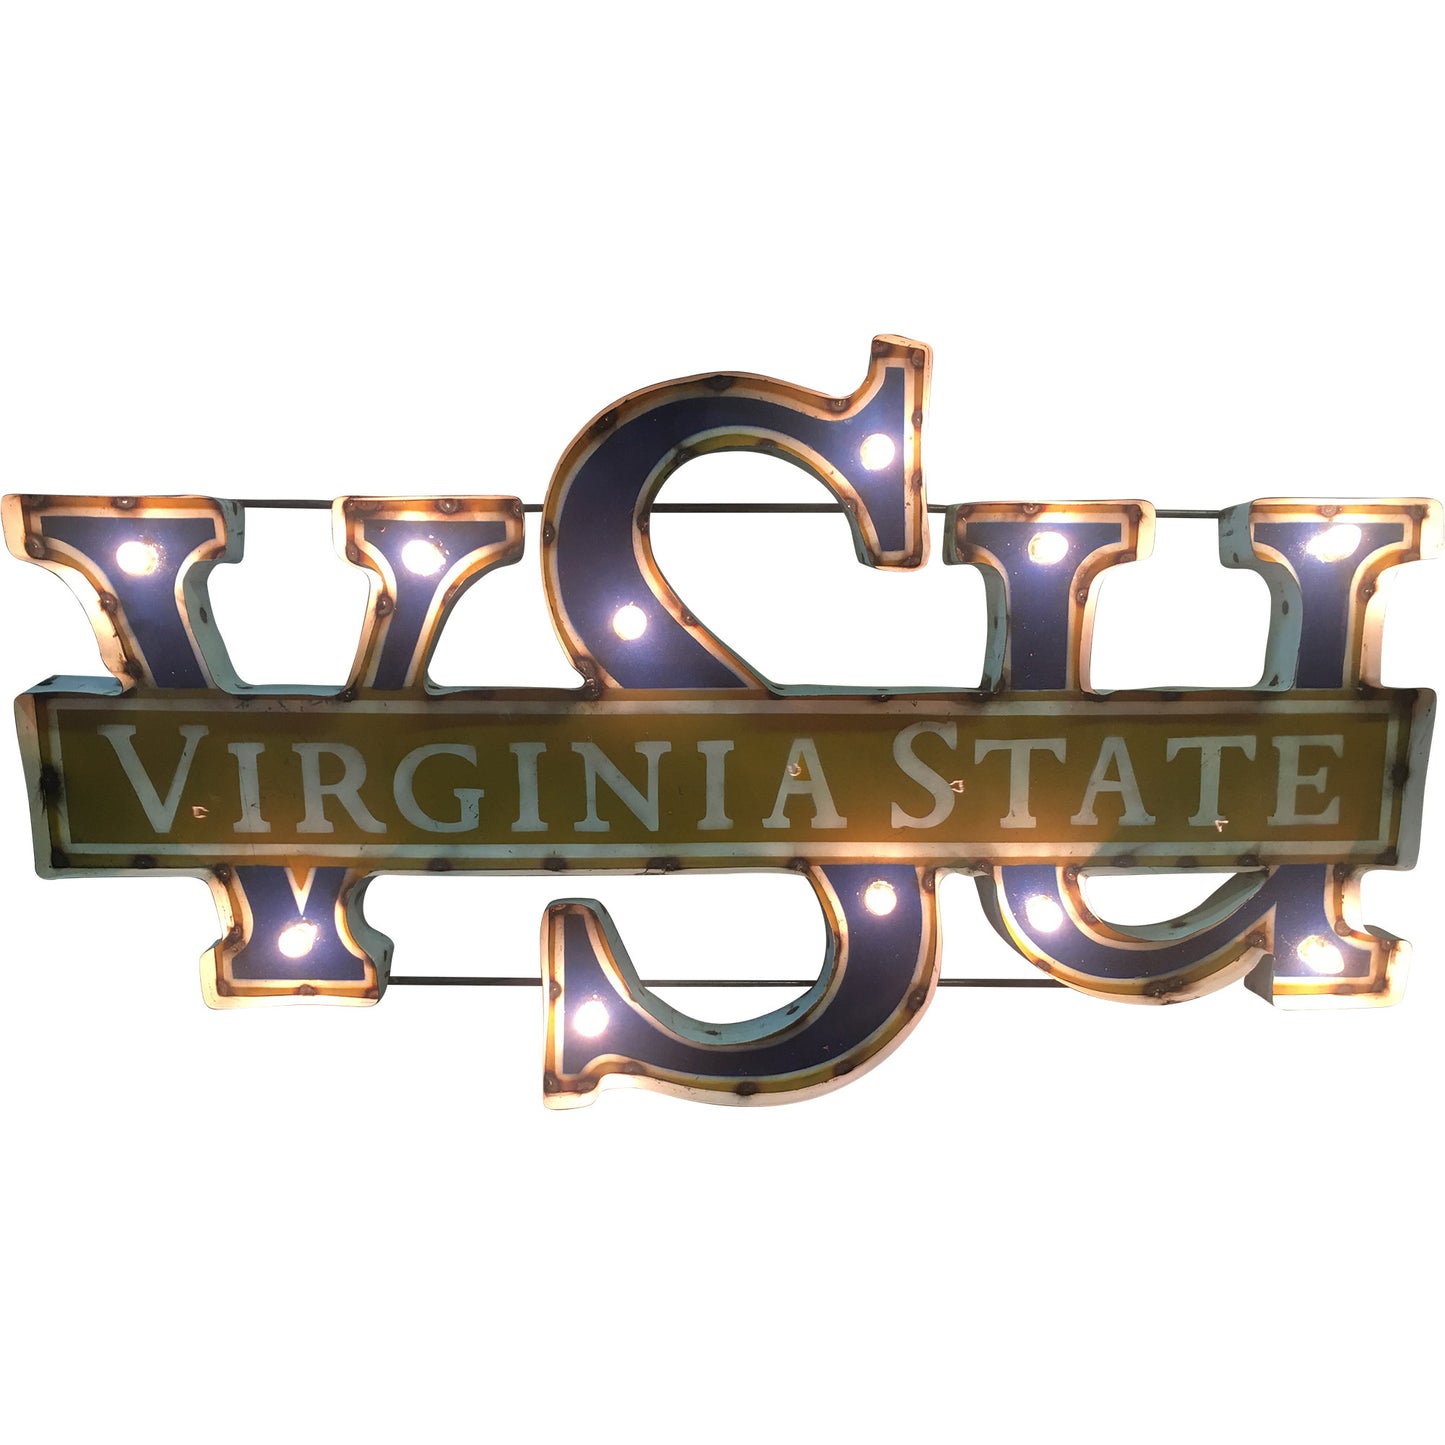 Virginia State University "VSU" Lighted Recycled Metal Wall Decor